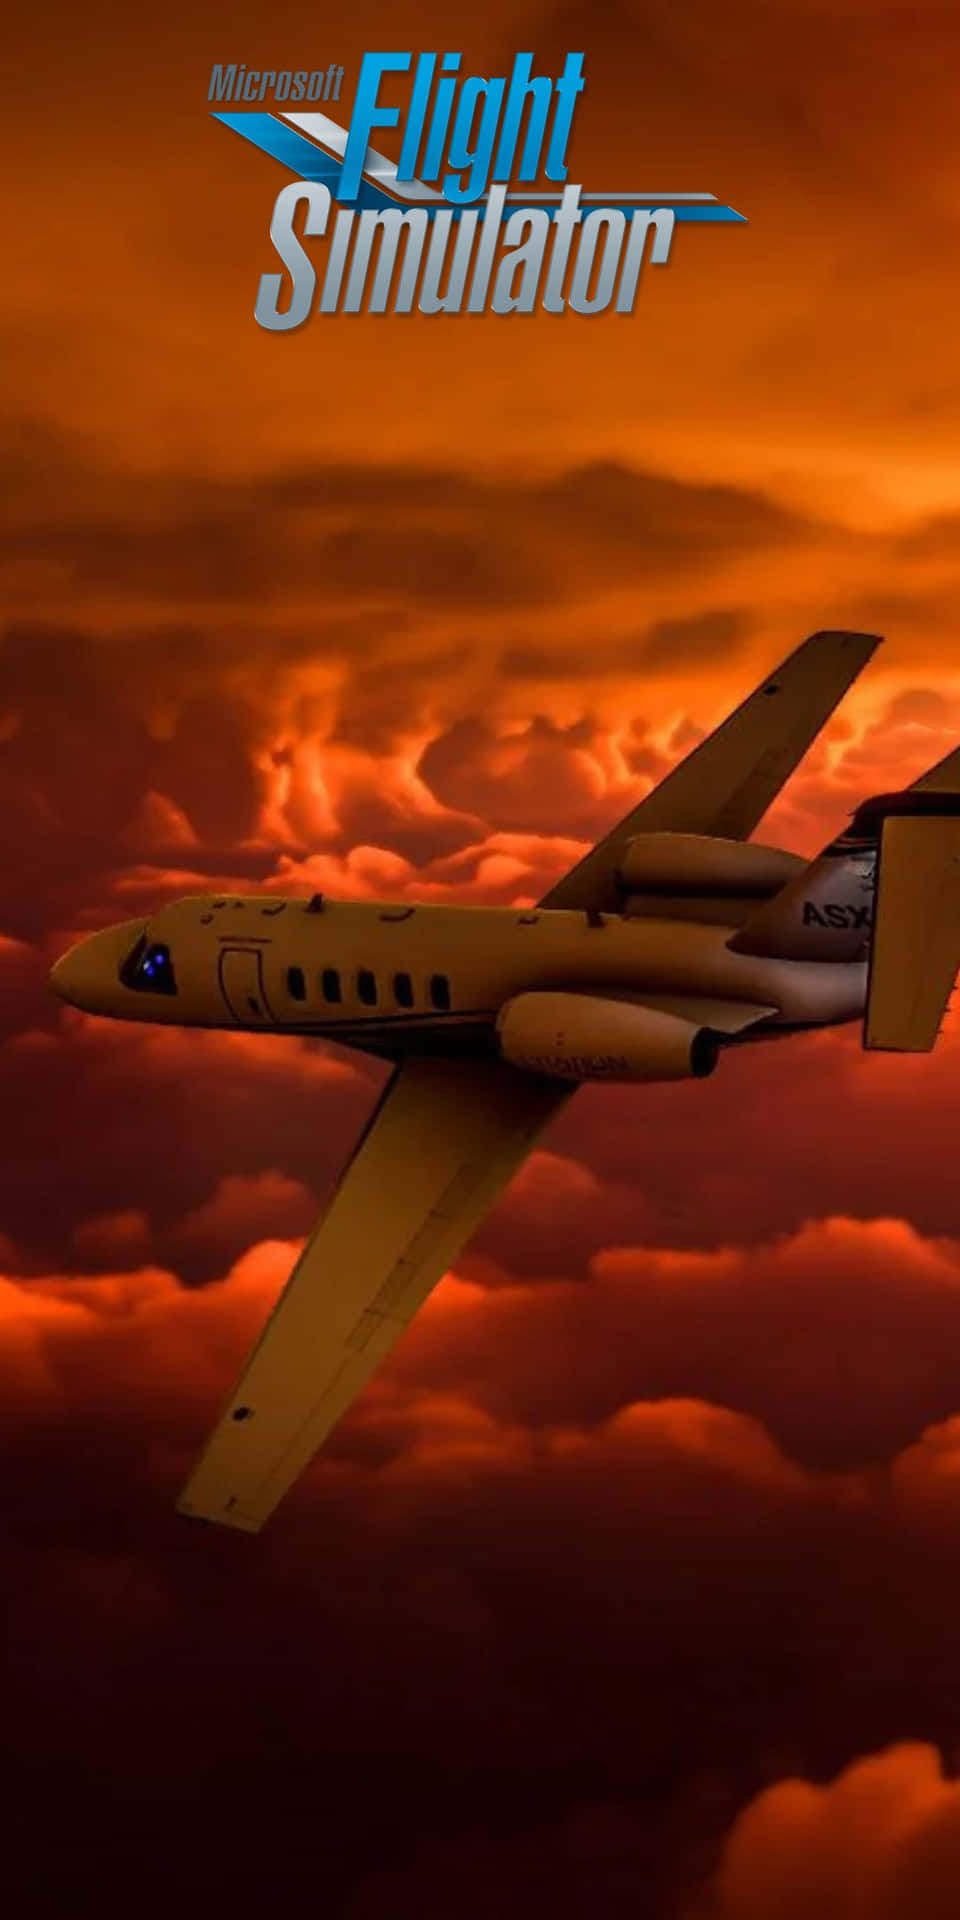 Taketo The Skies Mit Pixel 3 Microsoft Flight Simulator.